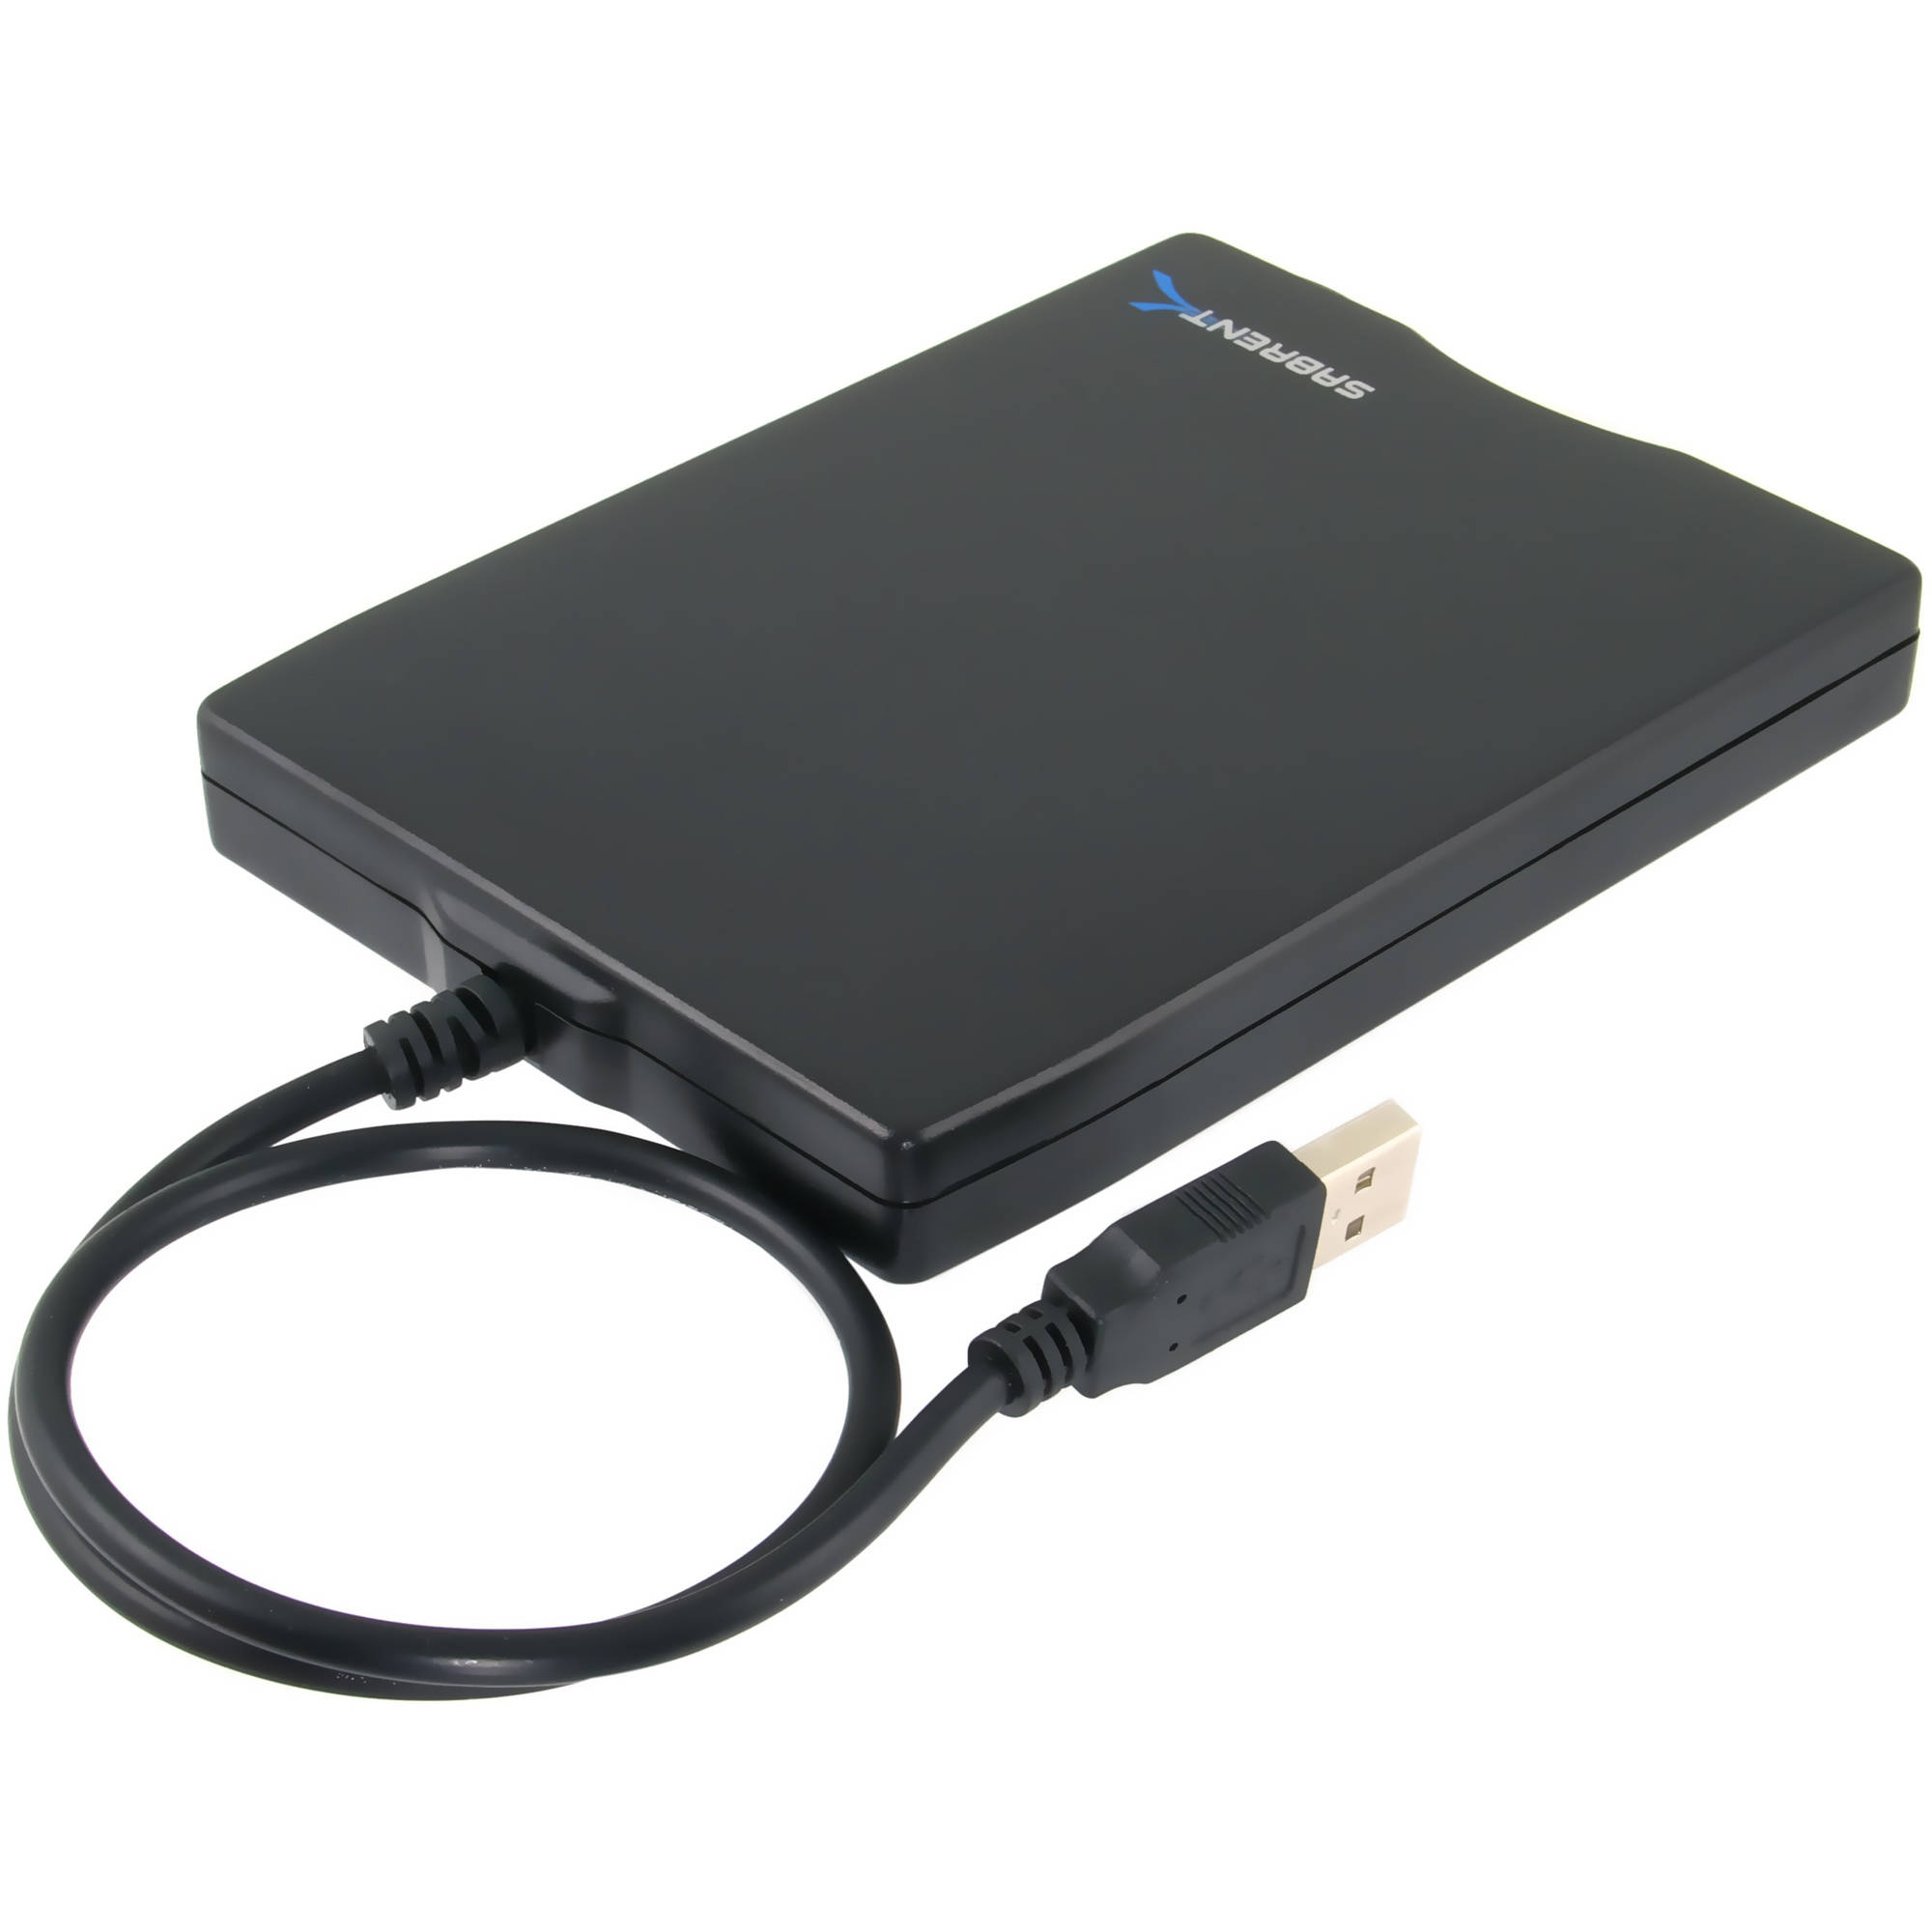 Sabrent USB 1.44MB FLOPPY DRIVE PORTABLE BLACK - image 3 of 5